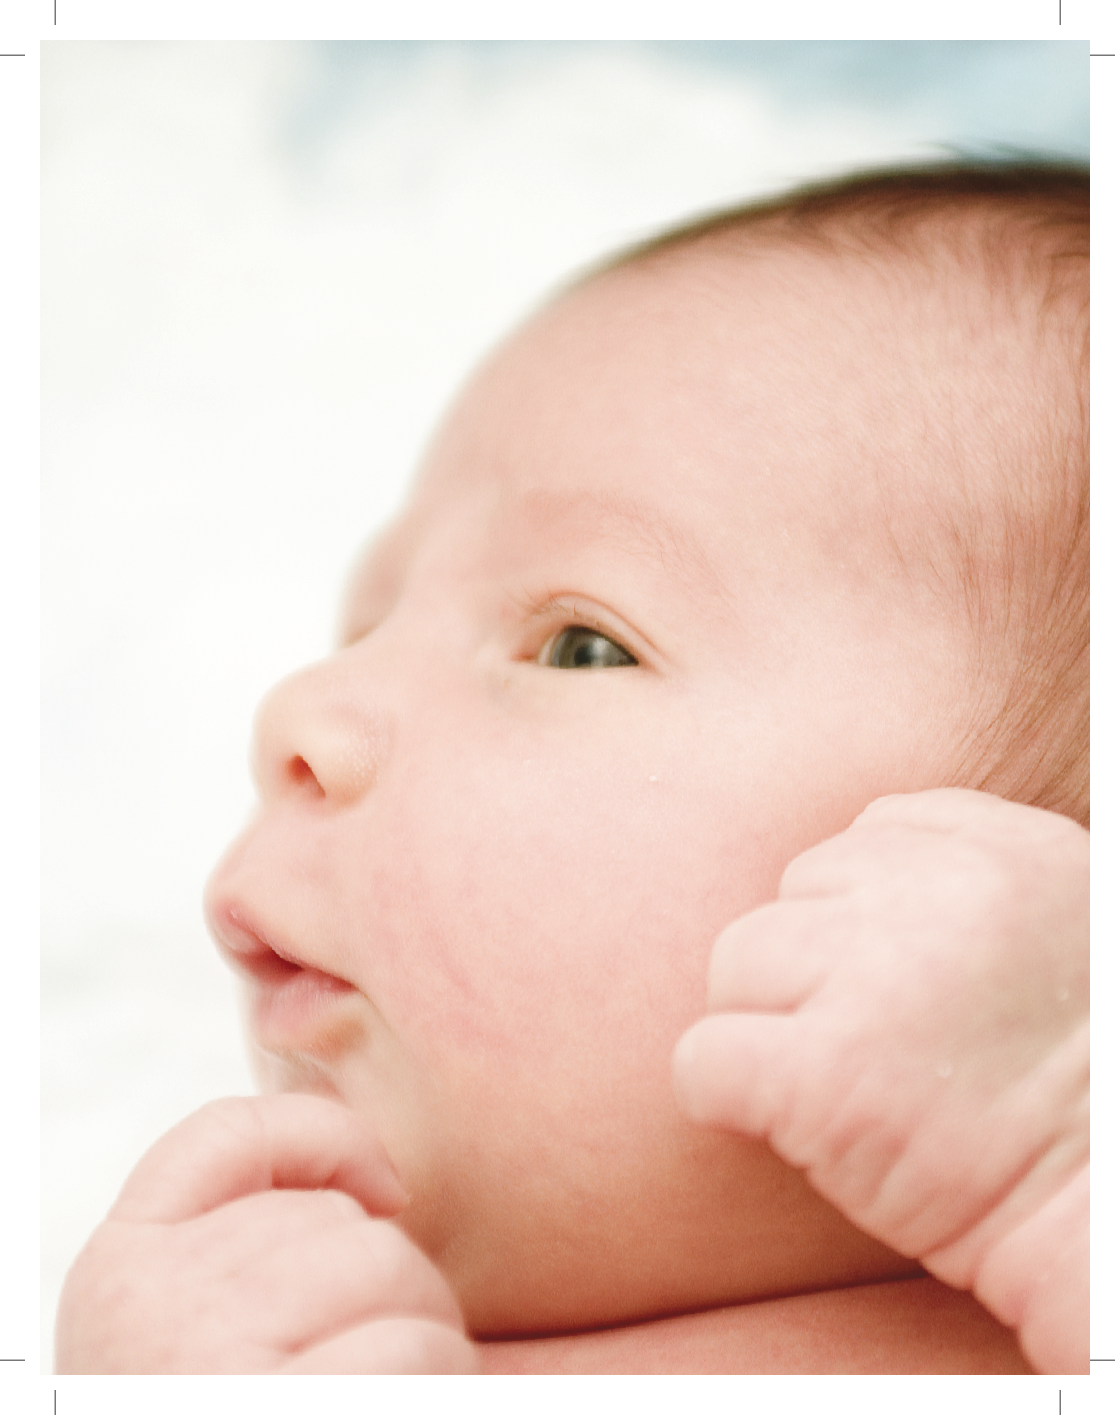 Physical Assessment of the Newborn: Minor Congenital Anomalies